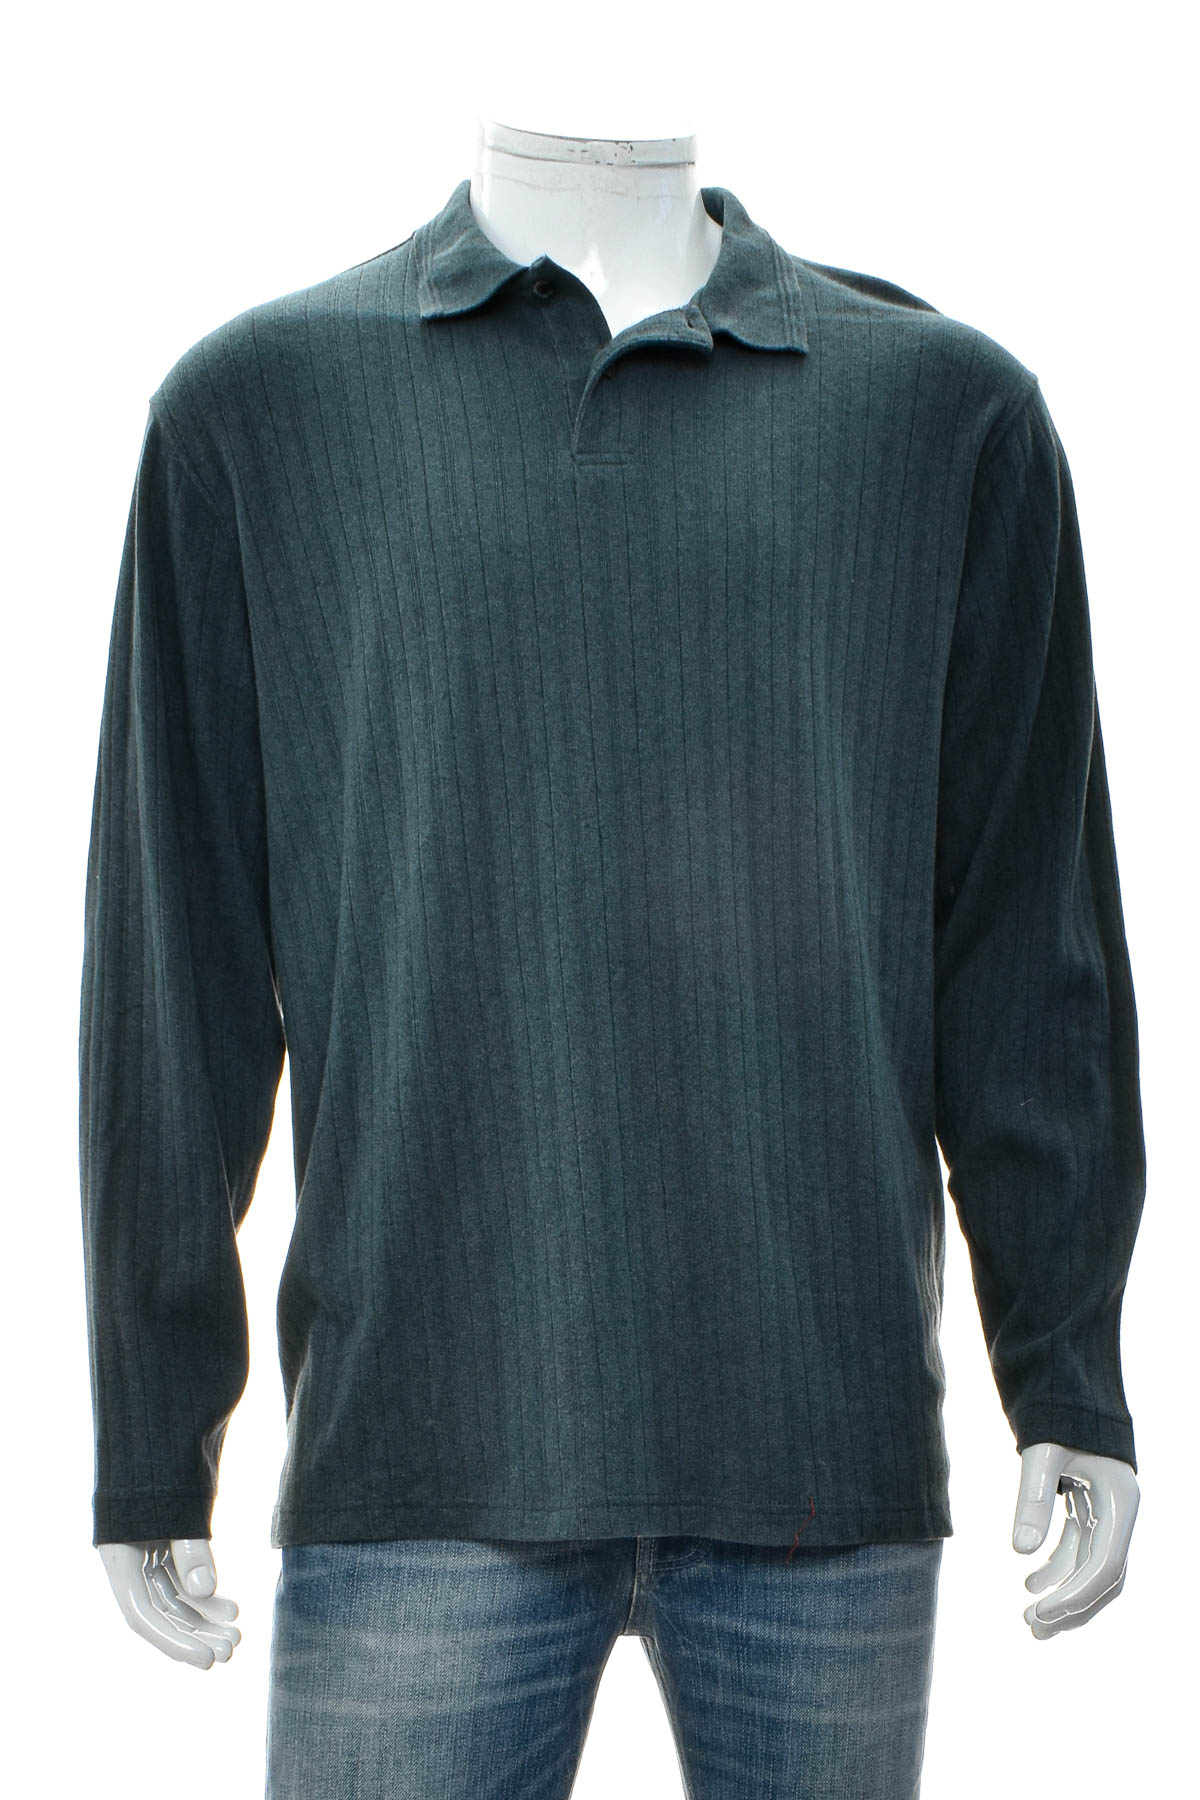 Men's sweater - AXIST - 0